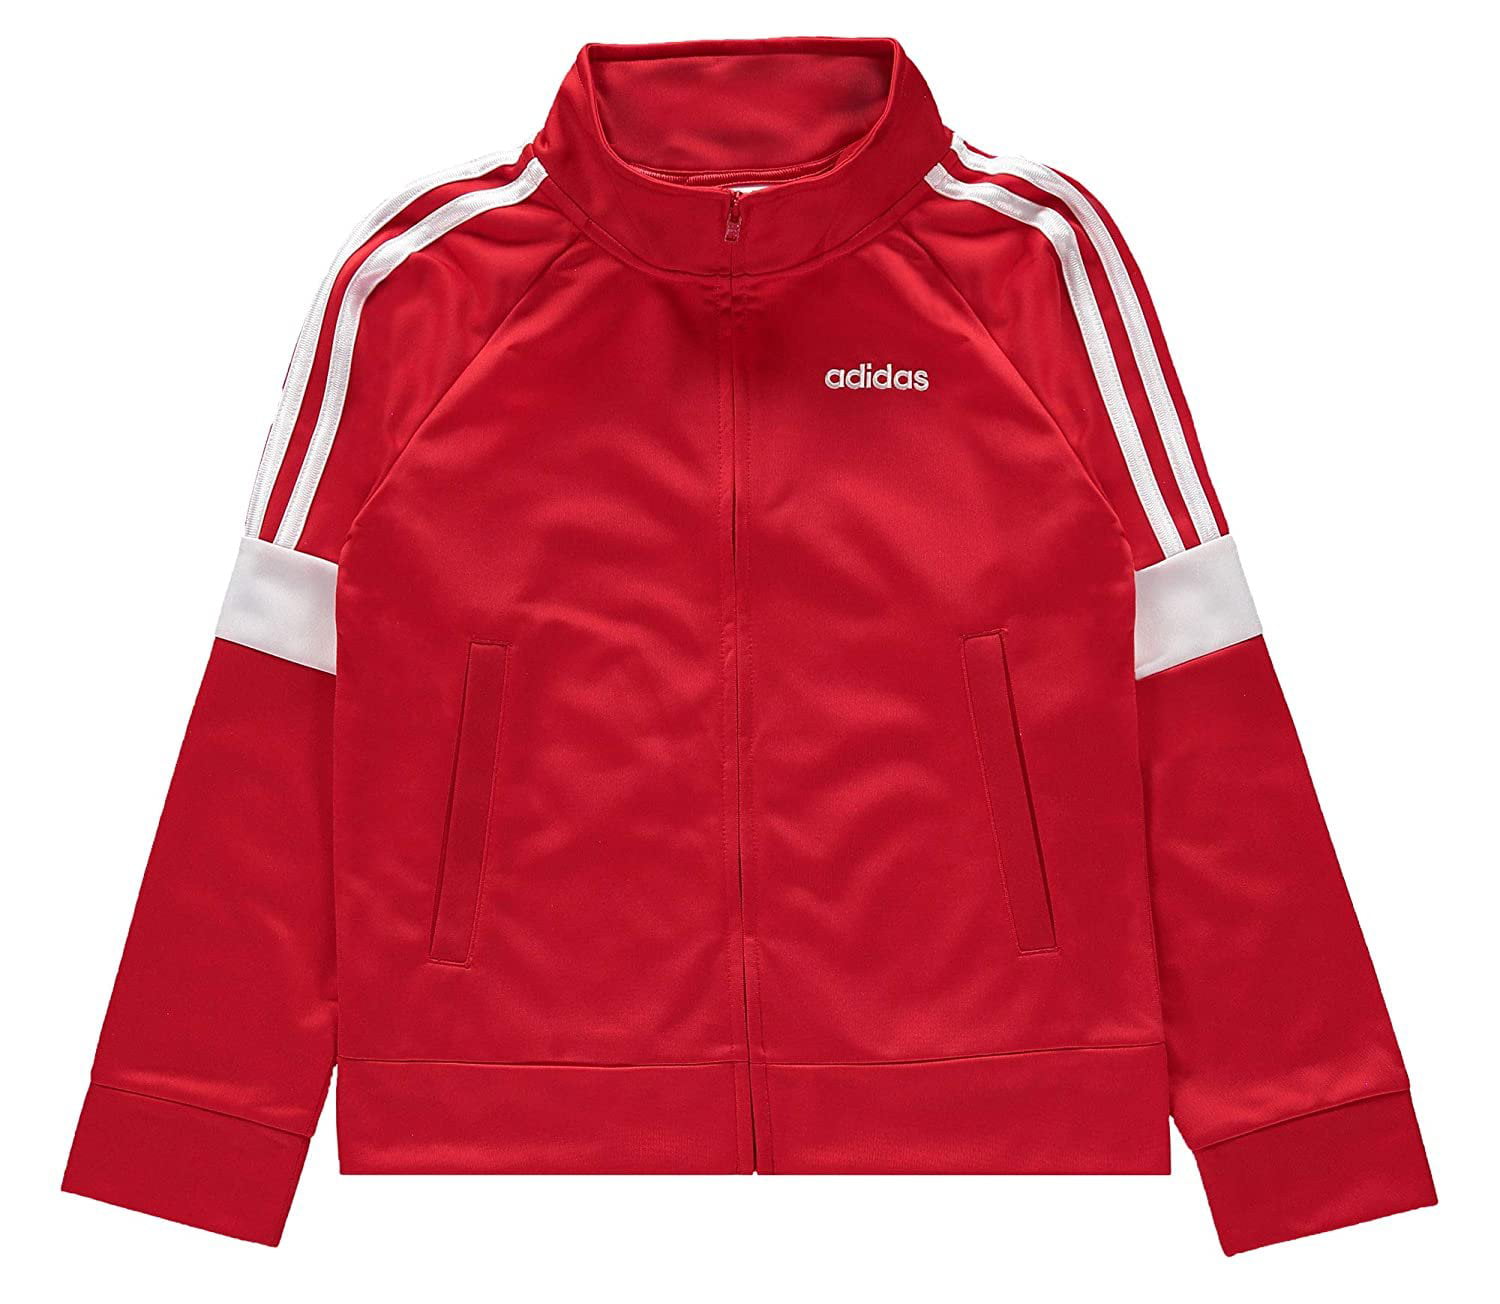 adidas Boys' Iconic Tricot Jacket (Red Event, S (8)) - Walmart.com ...